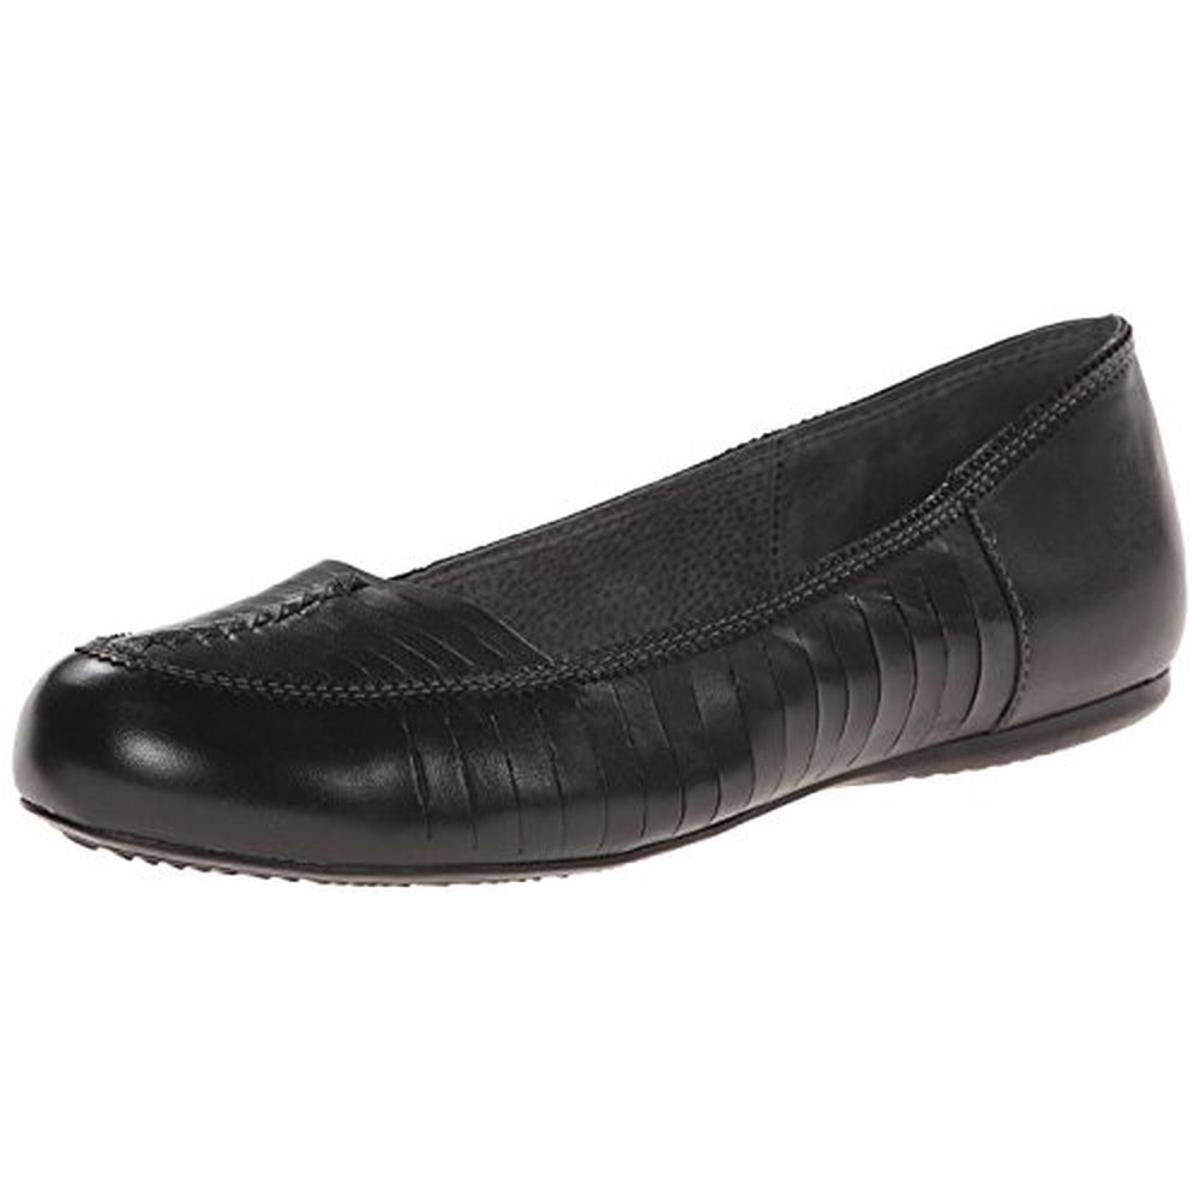 SoftWalk 3846 Womens Natchez Leather Round Toe Casual Flats Shoes BHFO ...